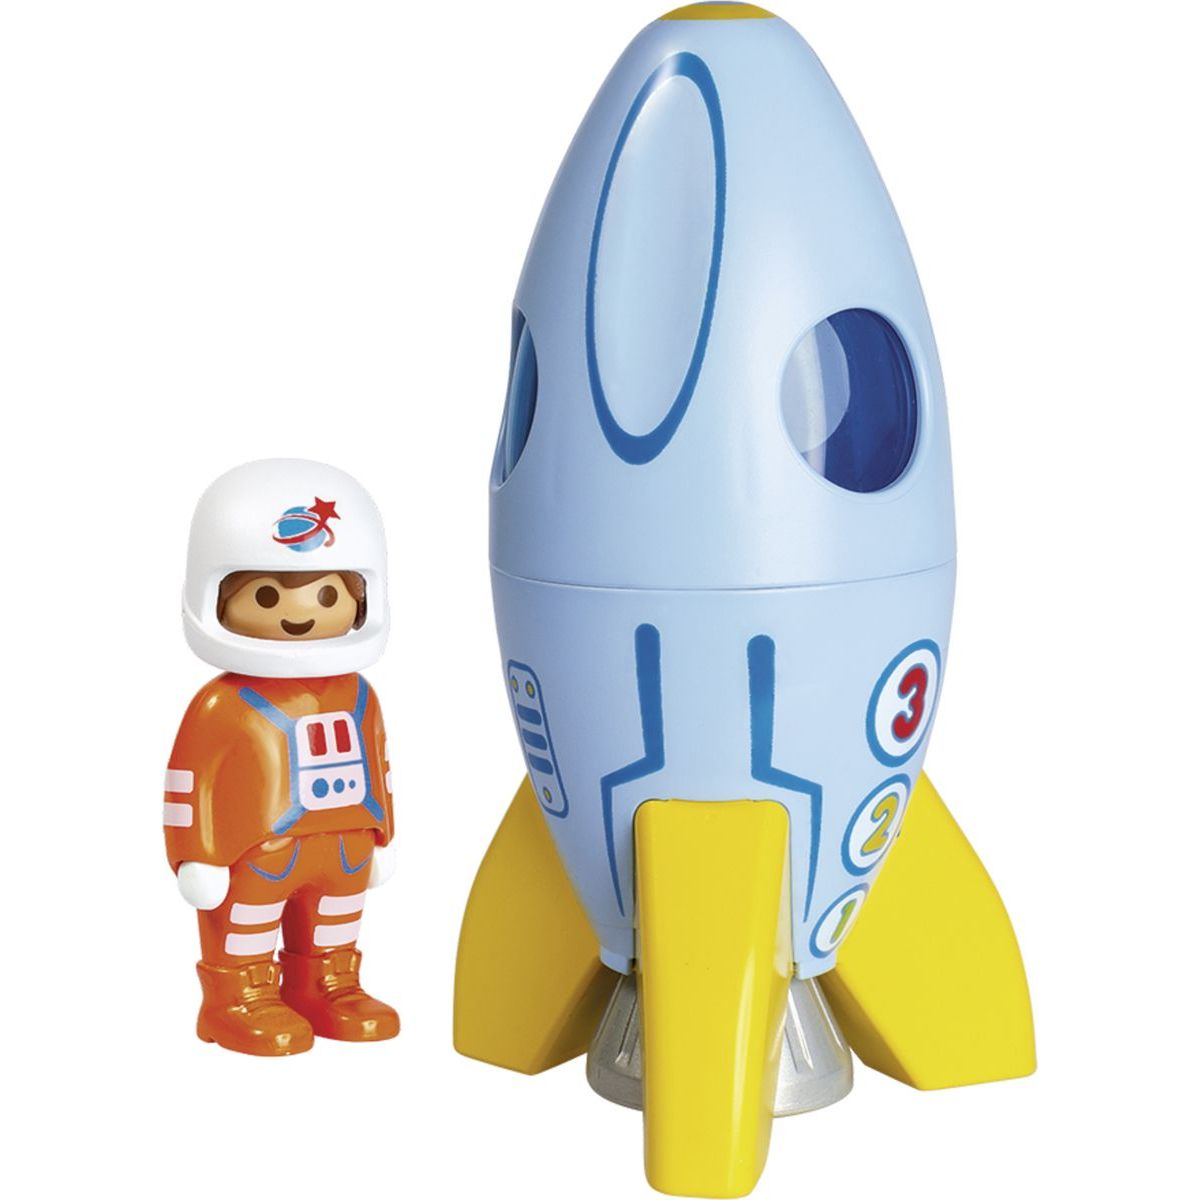 PLAYMOBIL® 70186 Astronaut s raketou